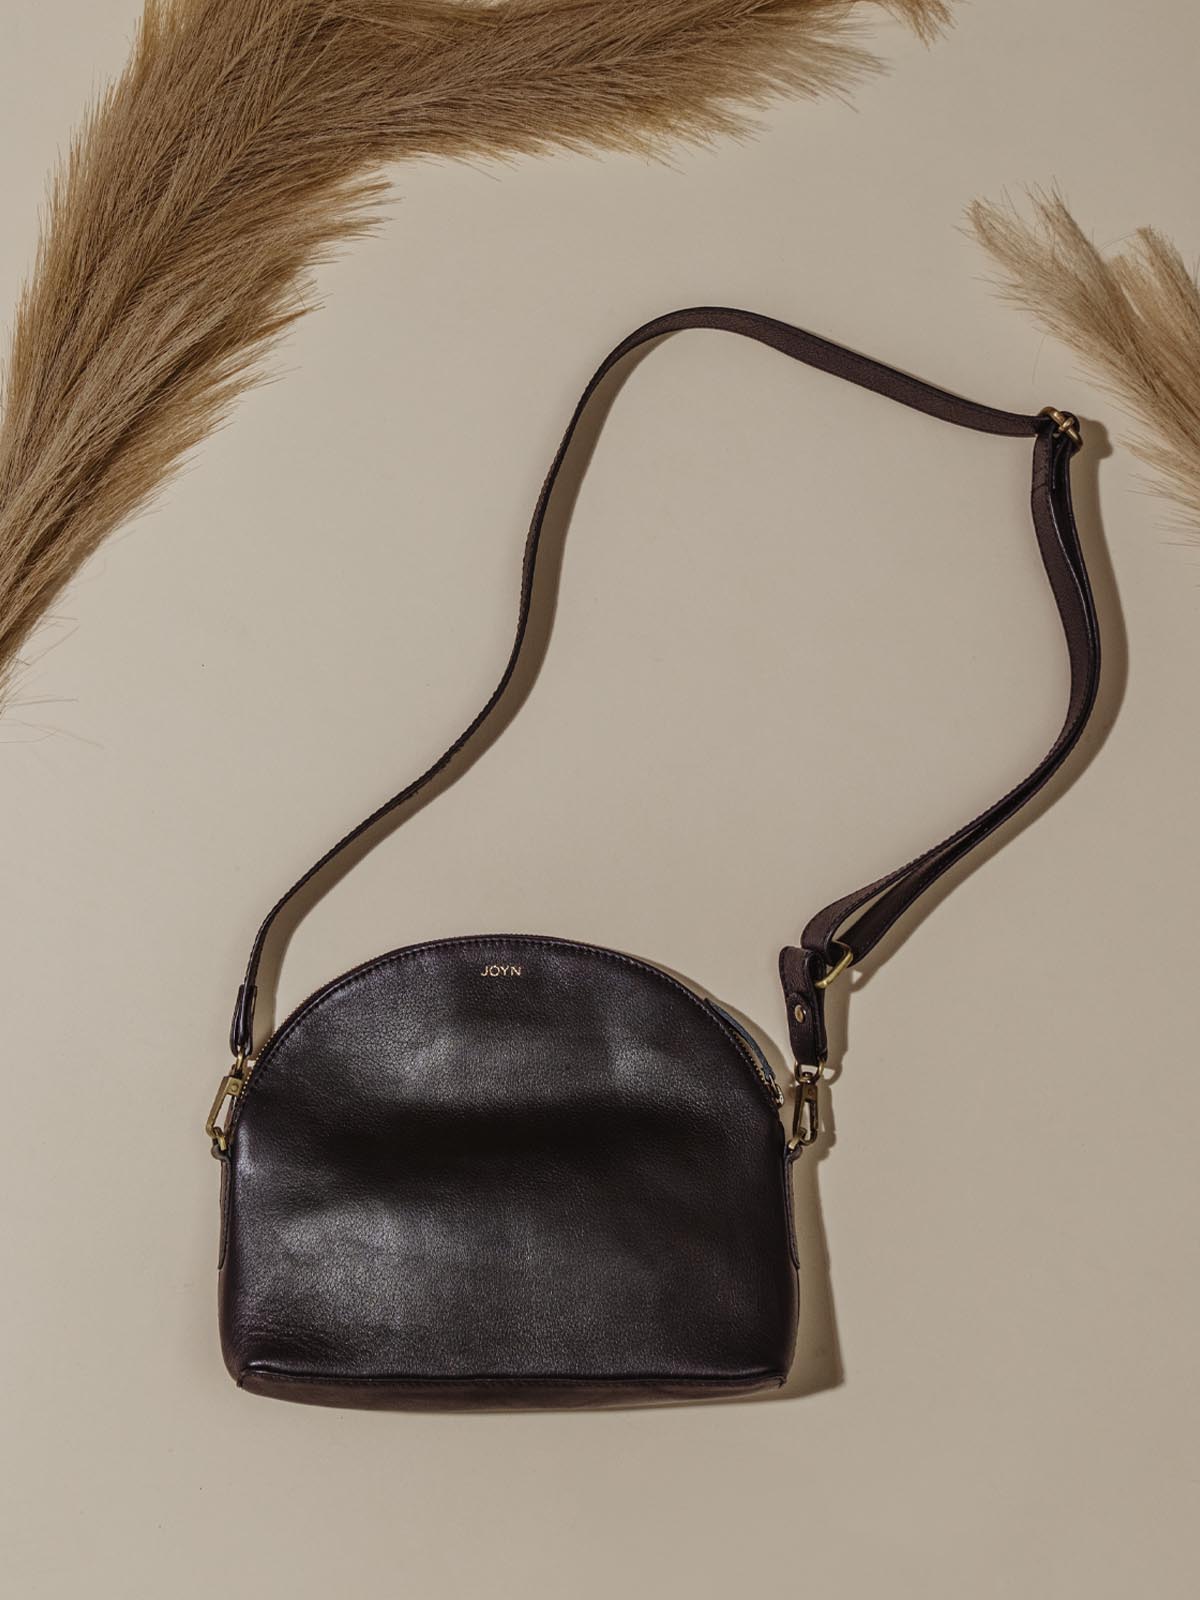 Black leather semi circle handbag laying on tan background. 